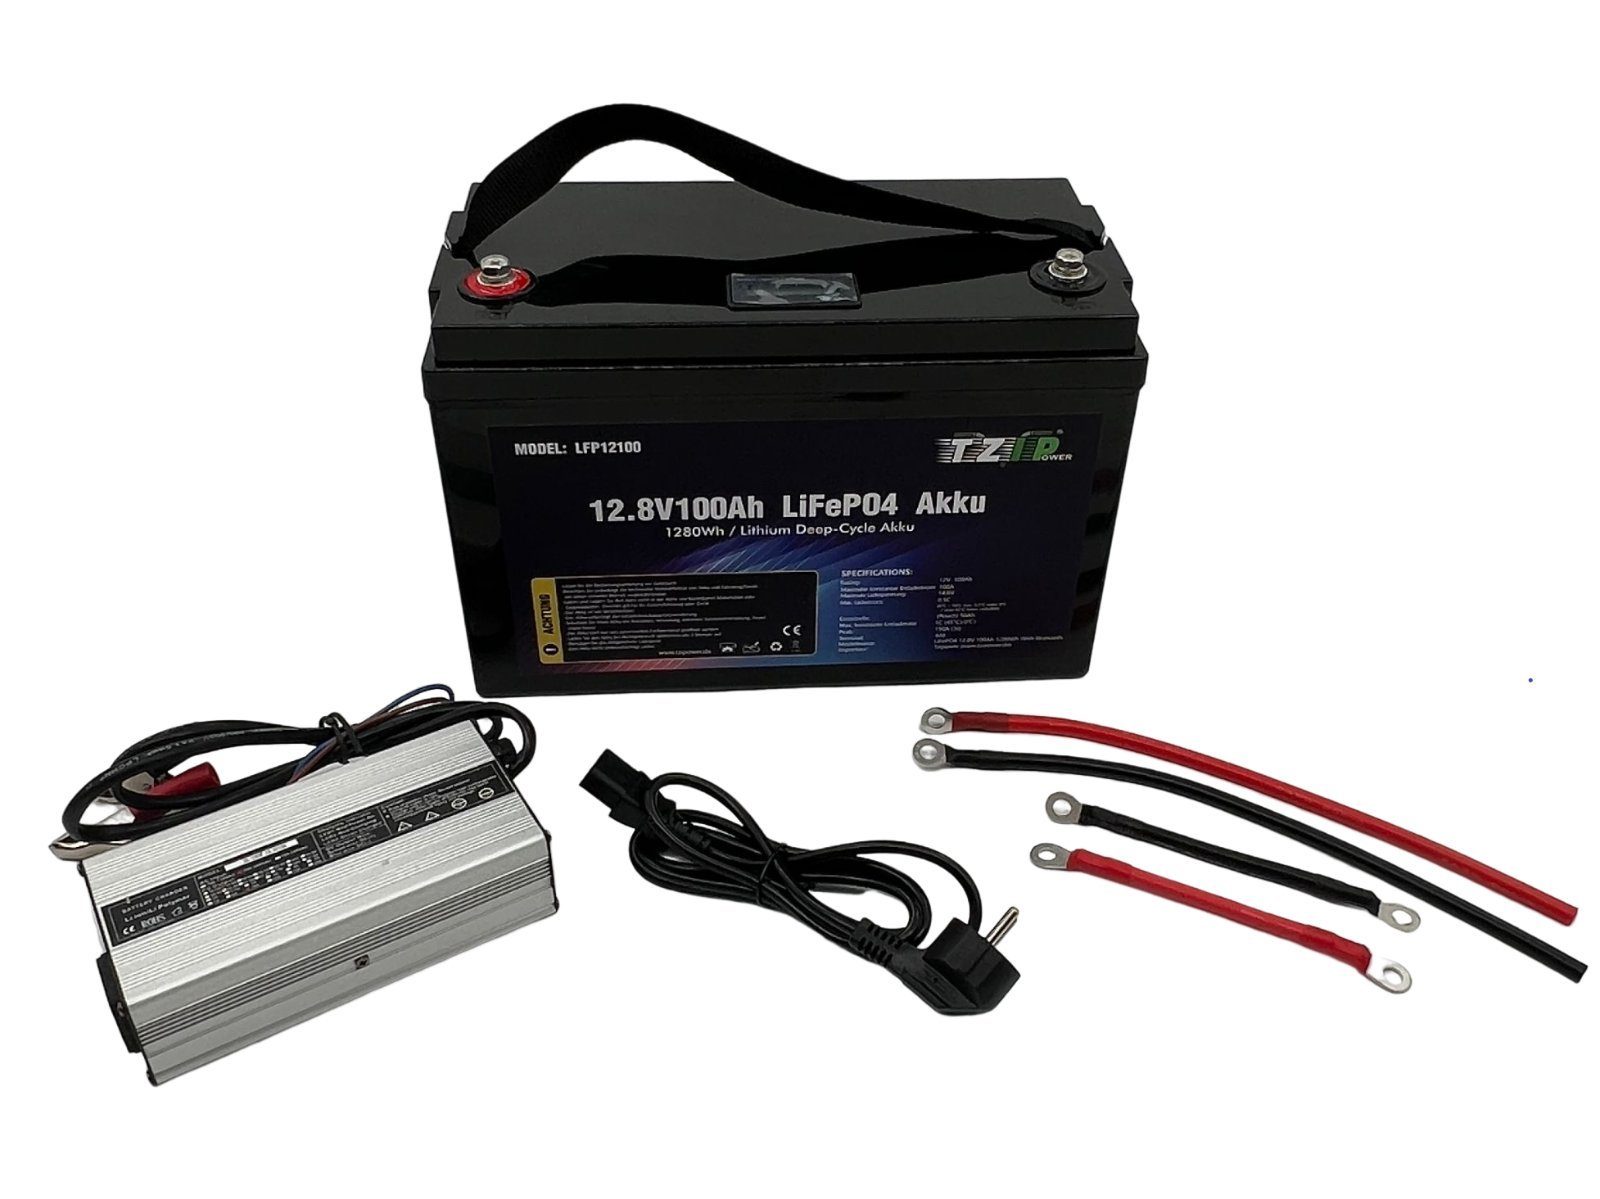 Q-BATTERIES Lithium Akku 12-8 12,8V 8Ah, 102,4Wh LiFePO4 Batterie online  kaufen